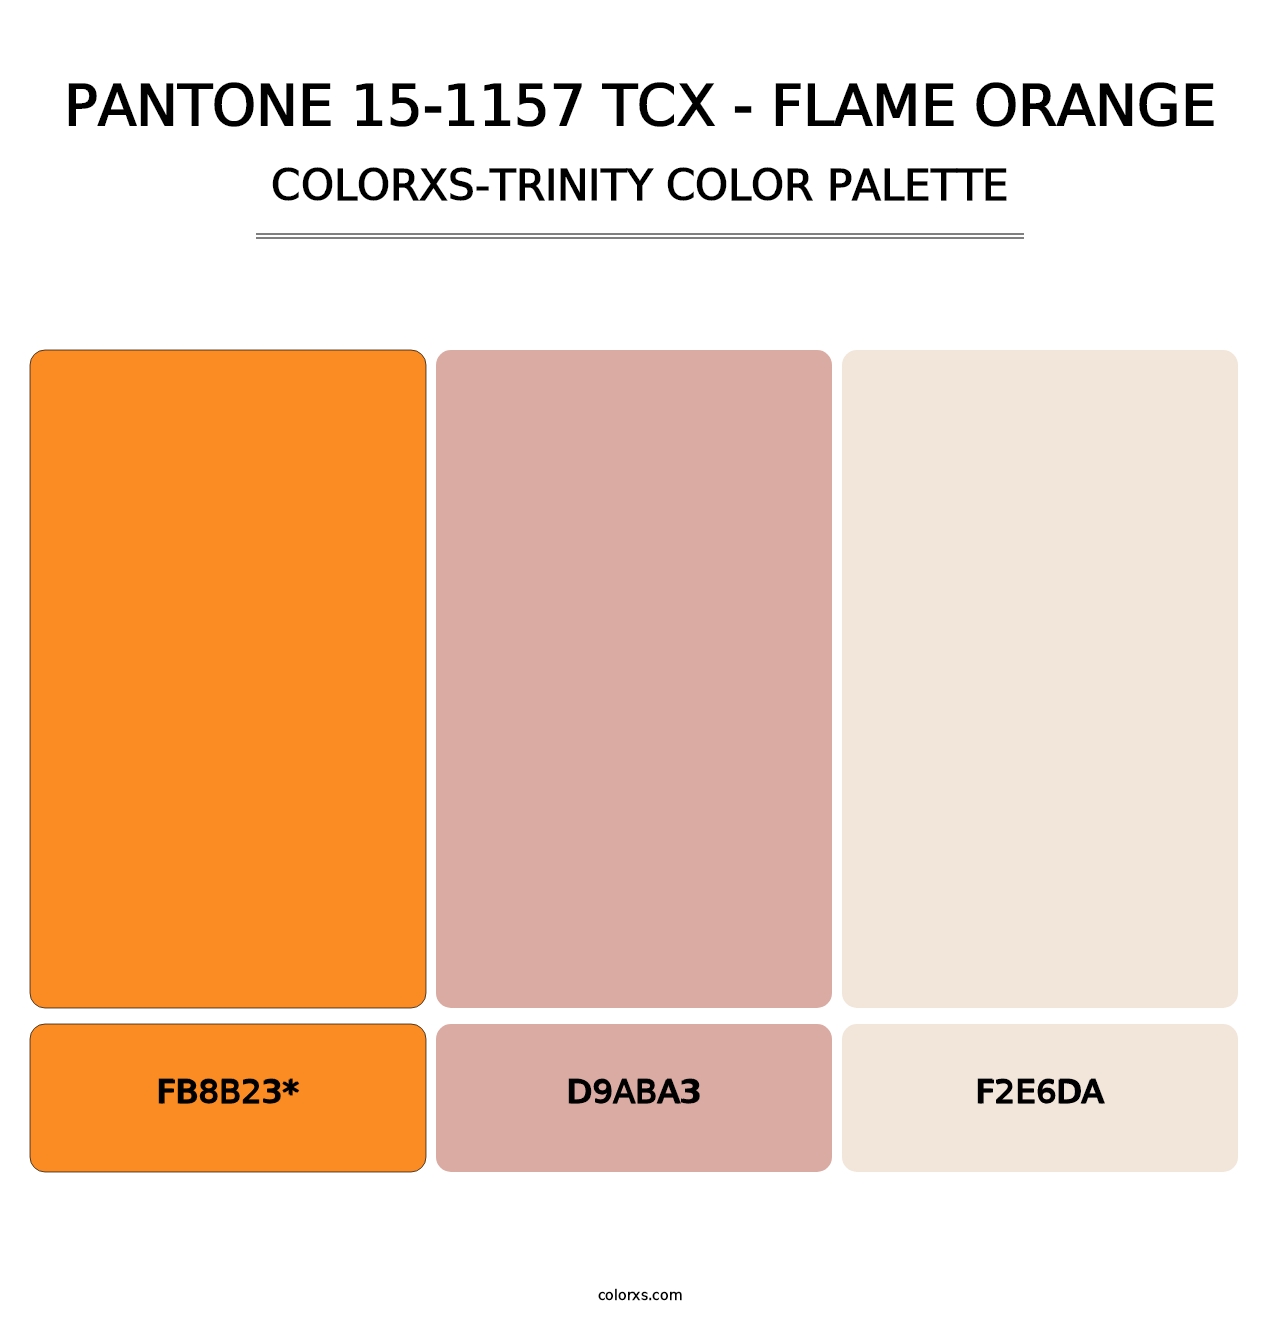 PANTONE 15-1157 TCX - Flame Orange - Colorxs Trinity Palette